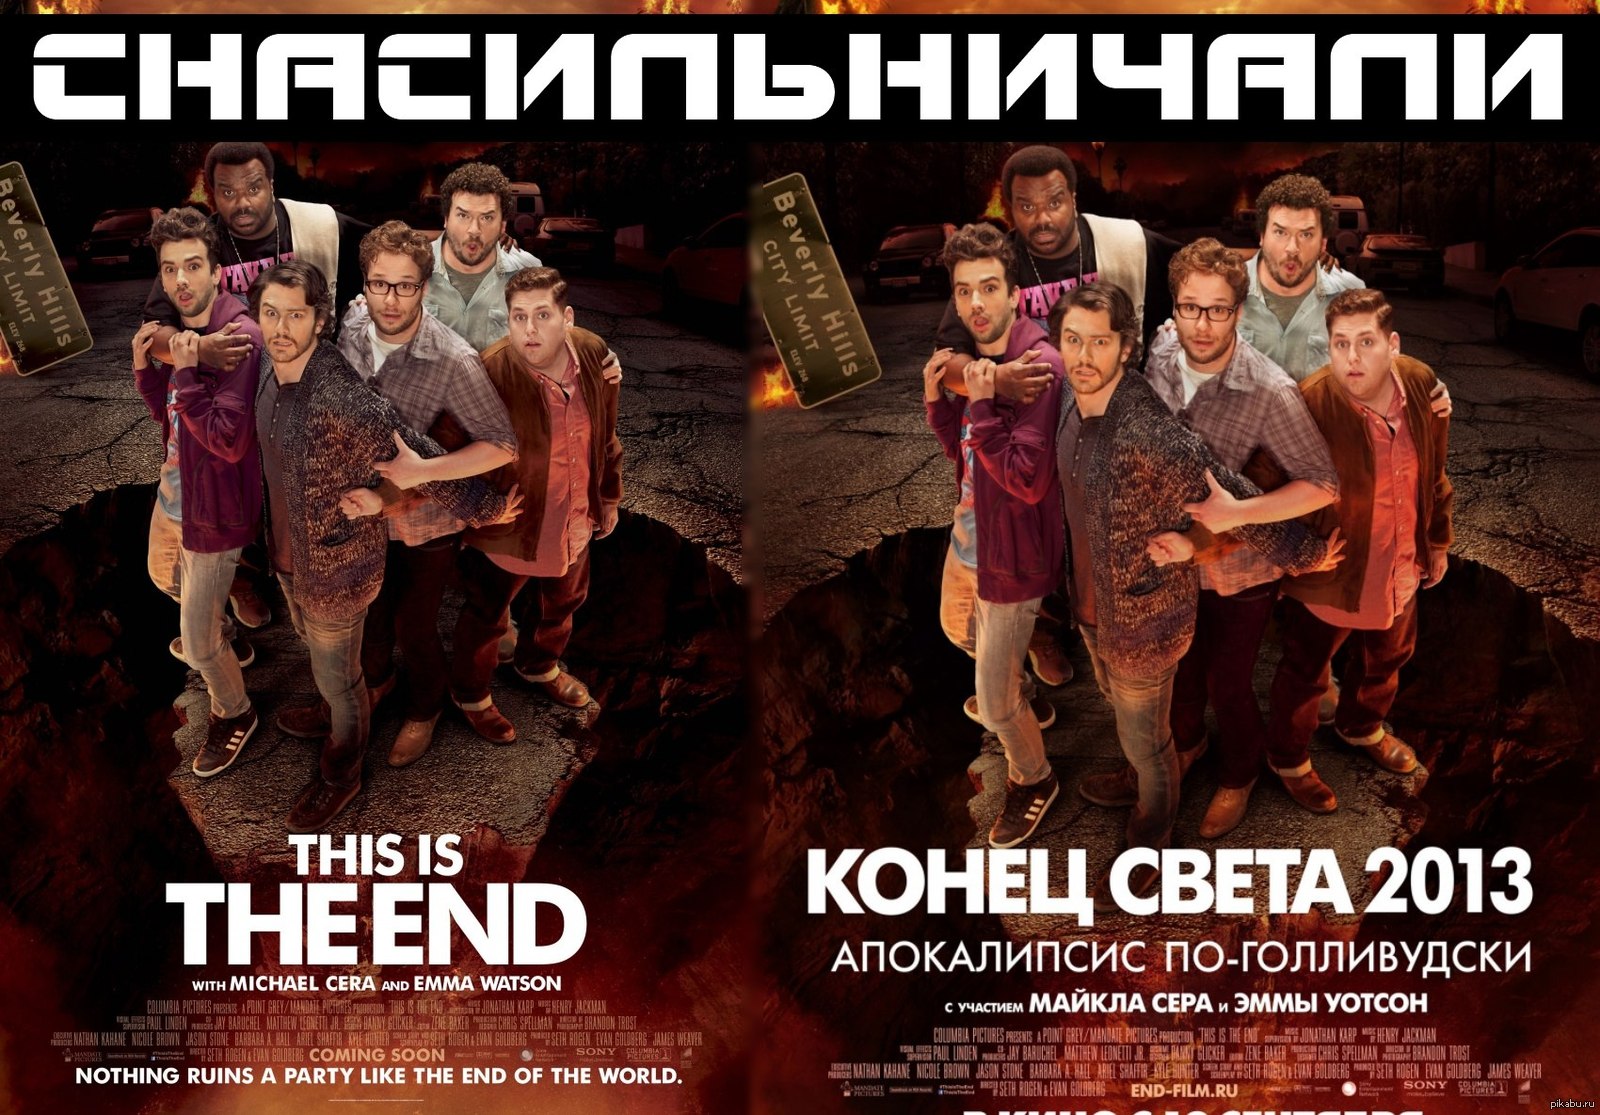 Надмозг. Конец света 2013: апокалипсис по-голливудски рай. Конец света 2013 апокалипсис по-голливудски Постер. Апокалипсис по голливудски Постер.